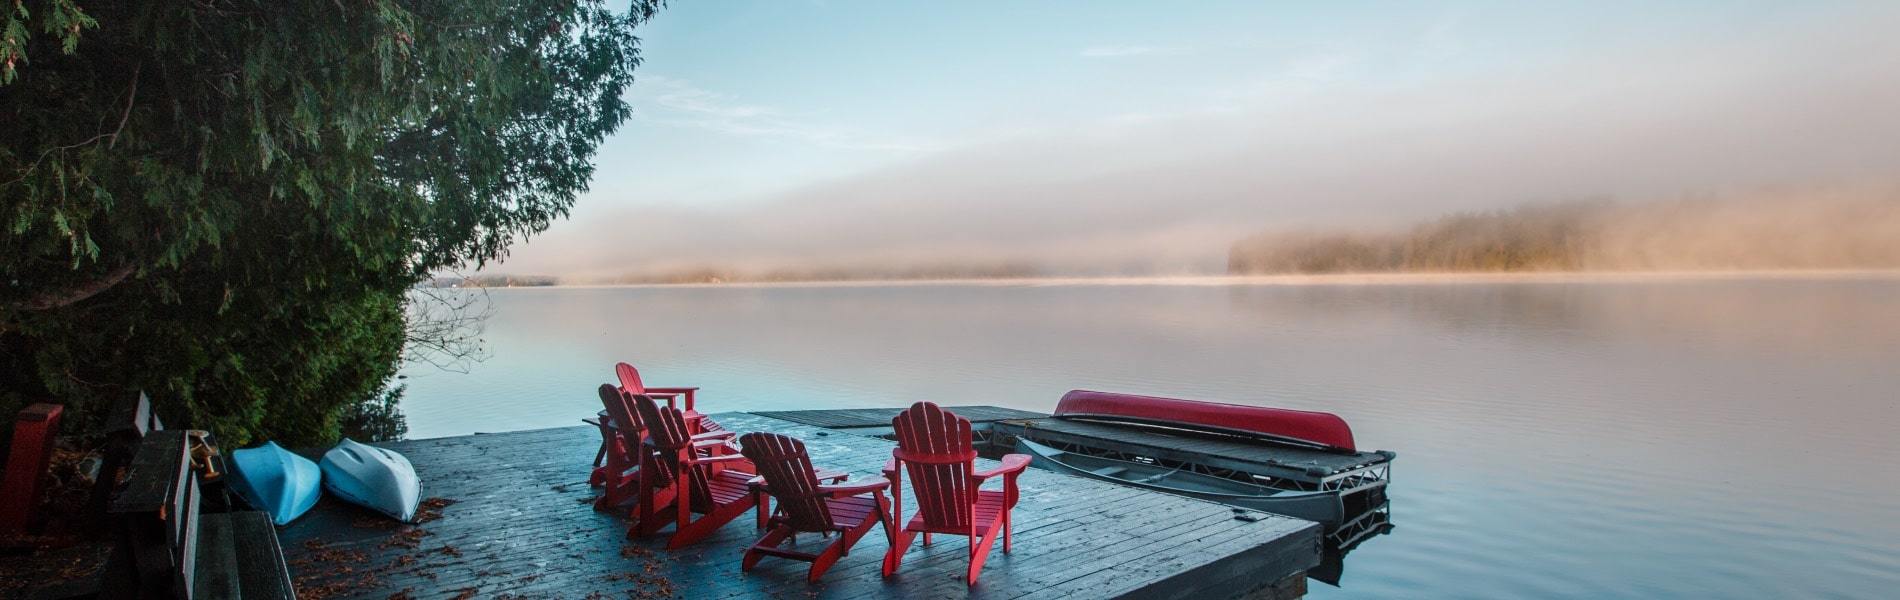 Muskoka chairs sitting on a lake in Northern Ontario